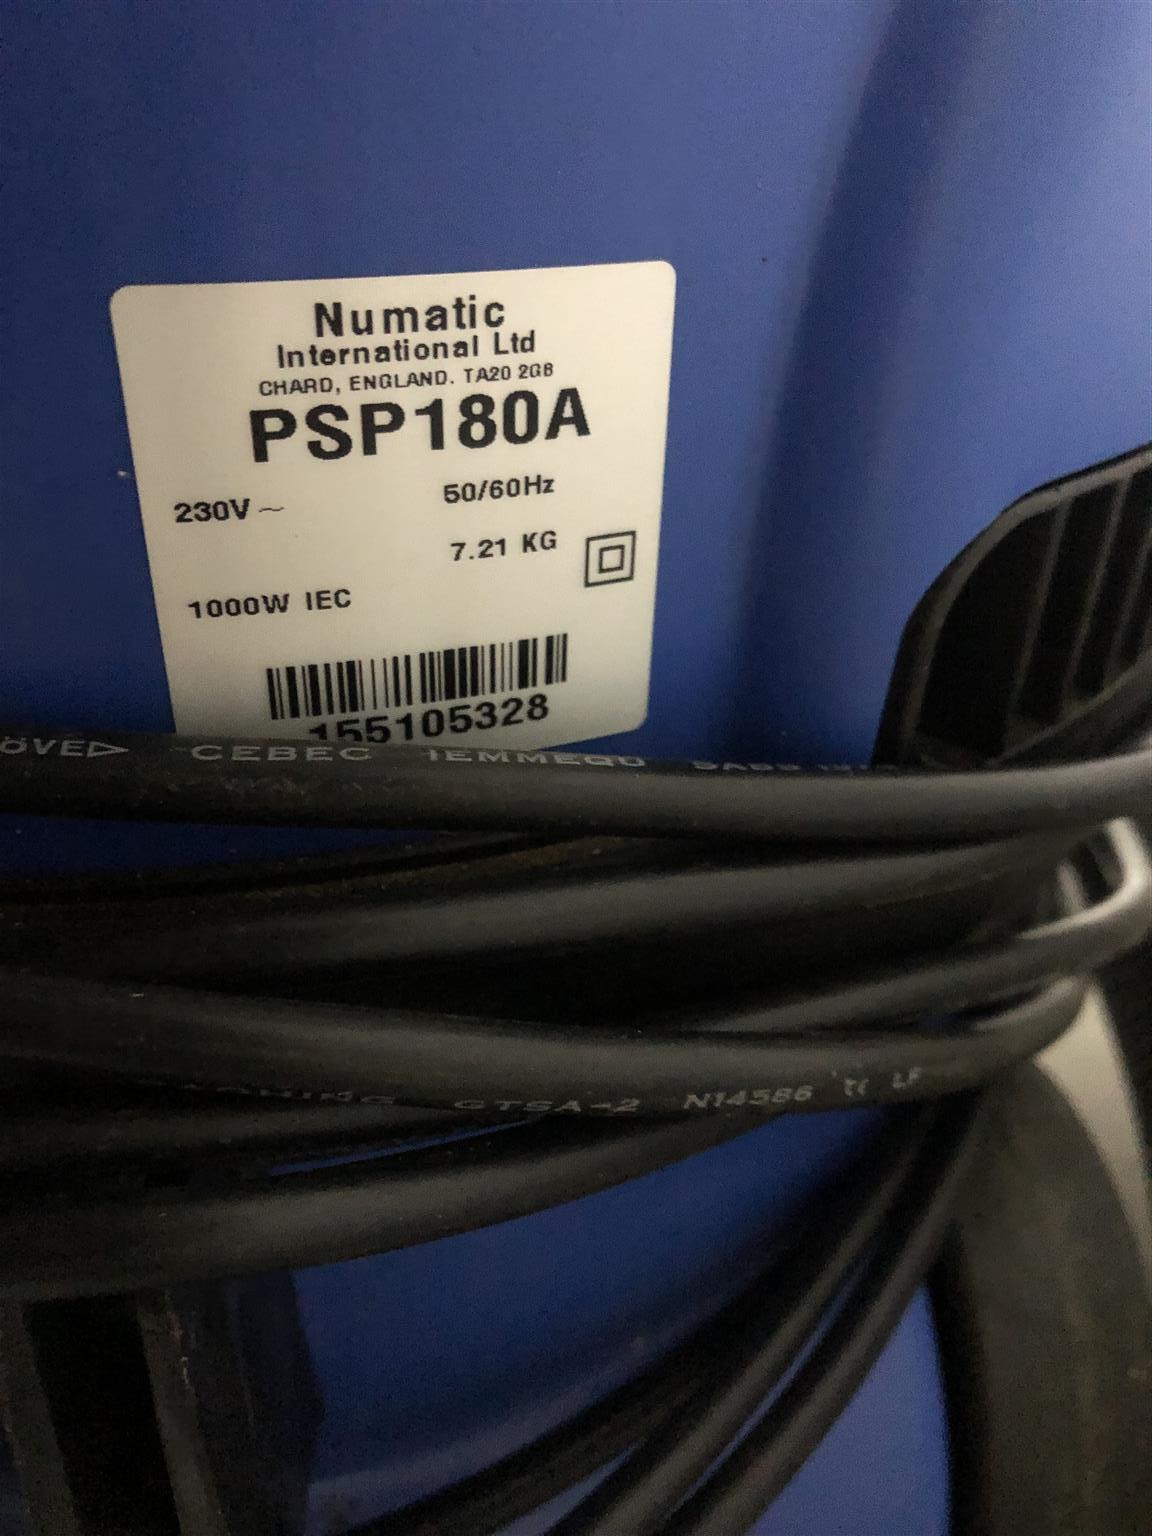 Vacuum Cleaner Numatic PSP180A 1000W - C033062825-3